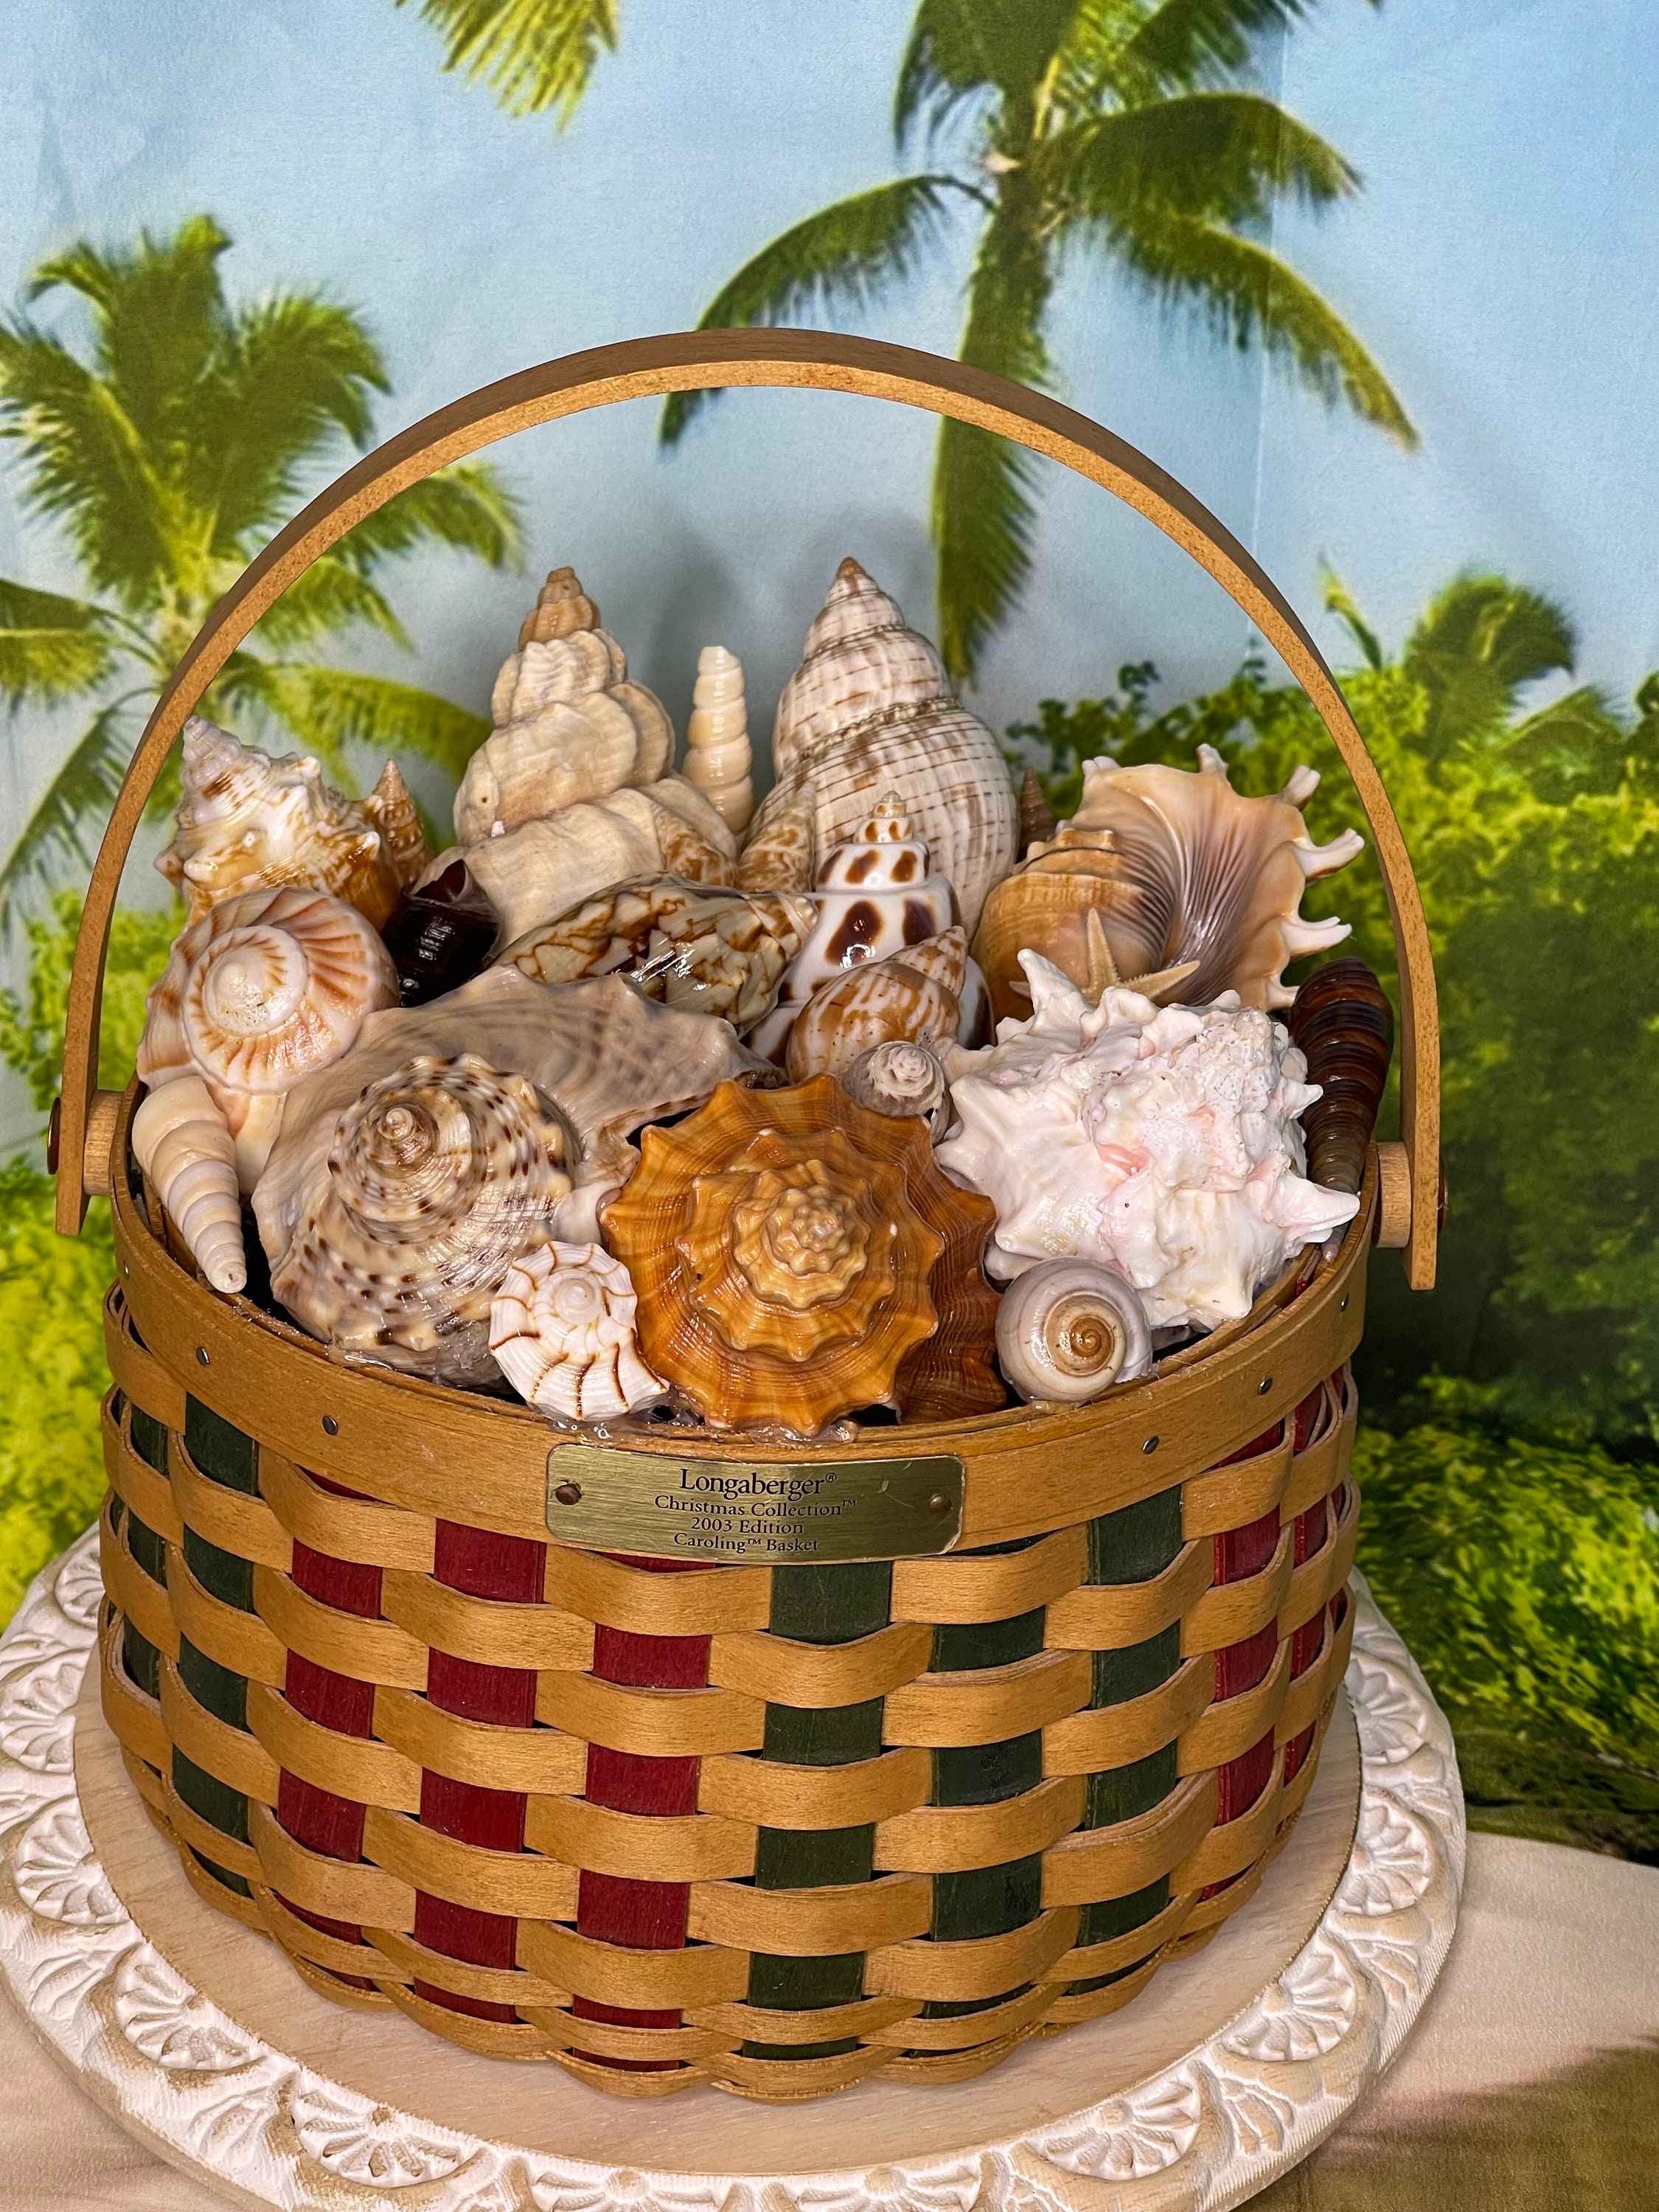 FREE SHIPPING Longaberger Basket Full of Seashells, Seashell